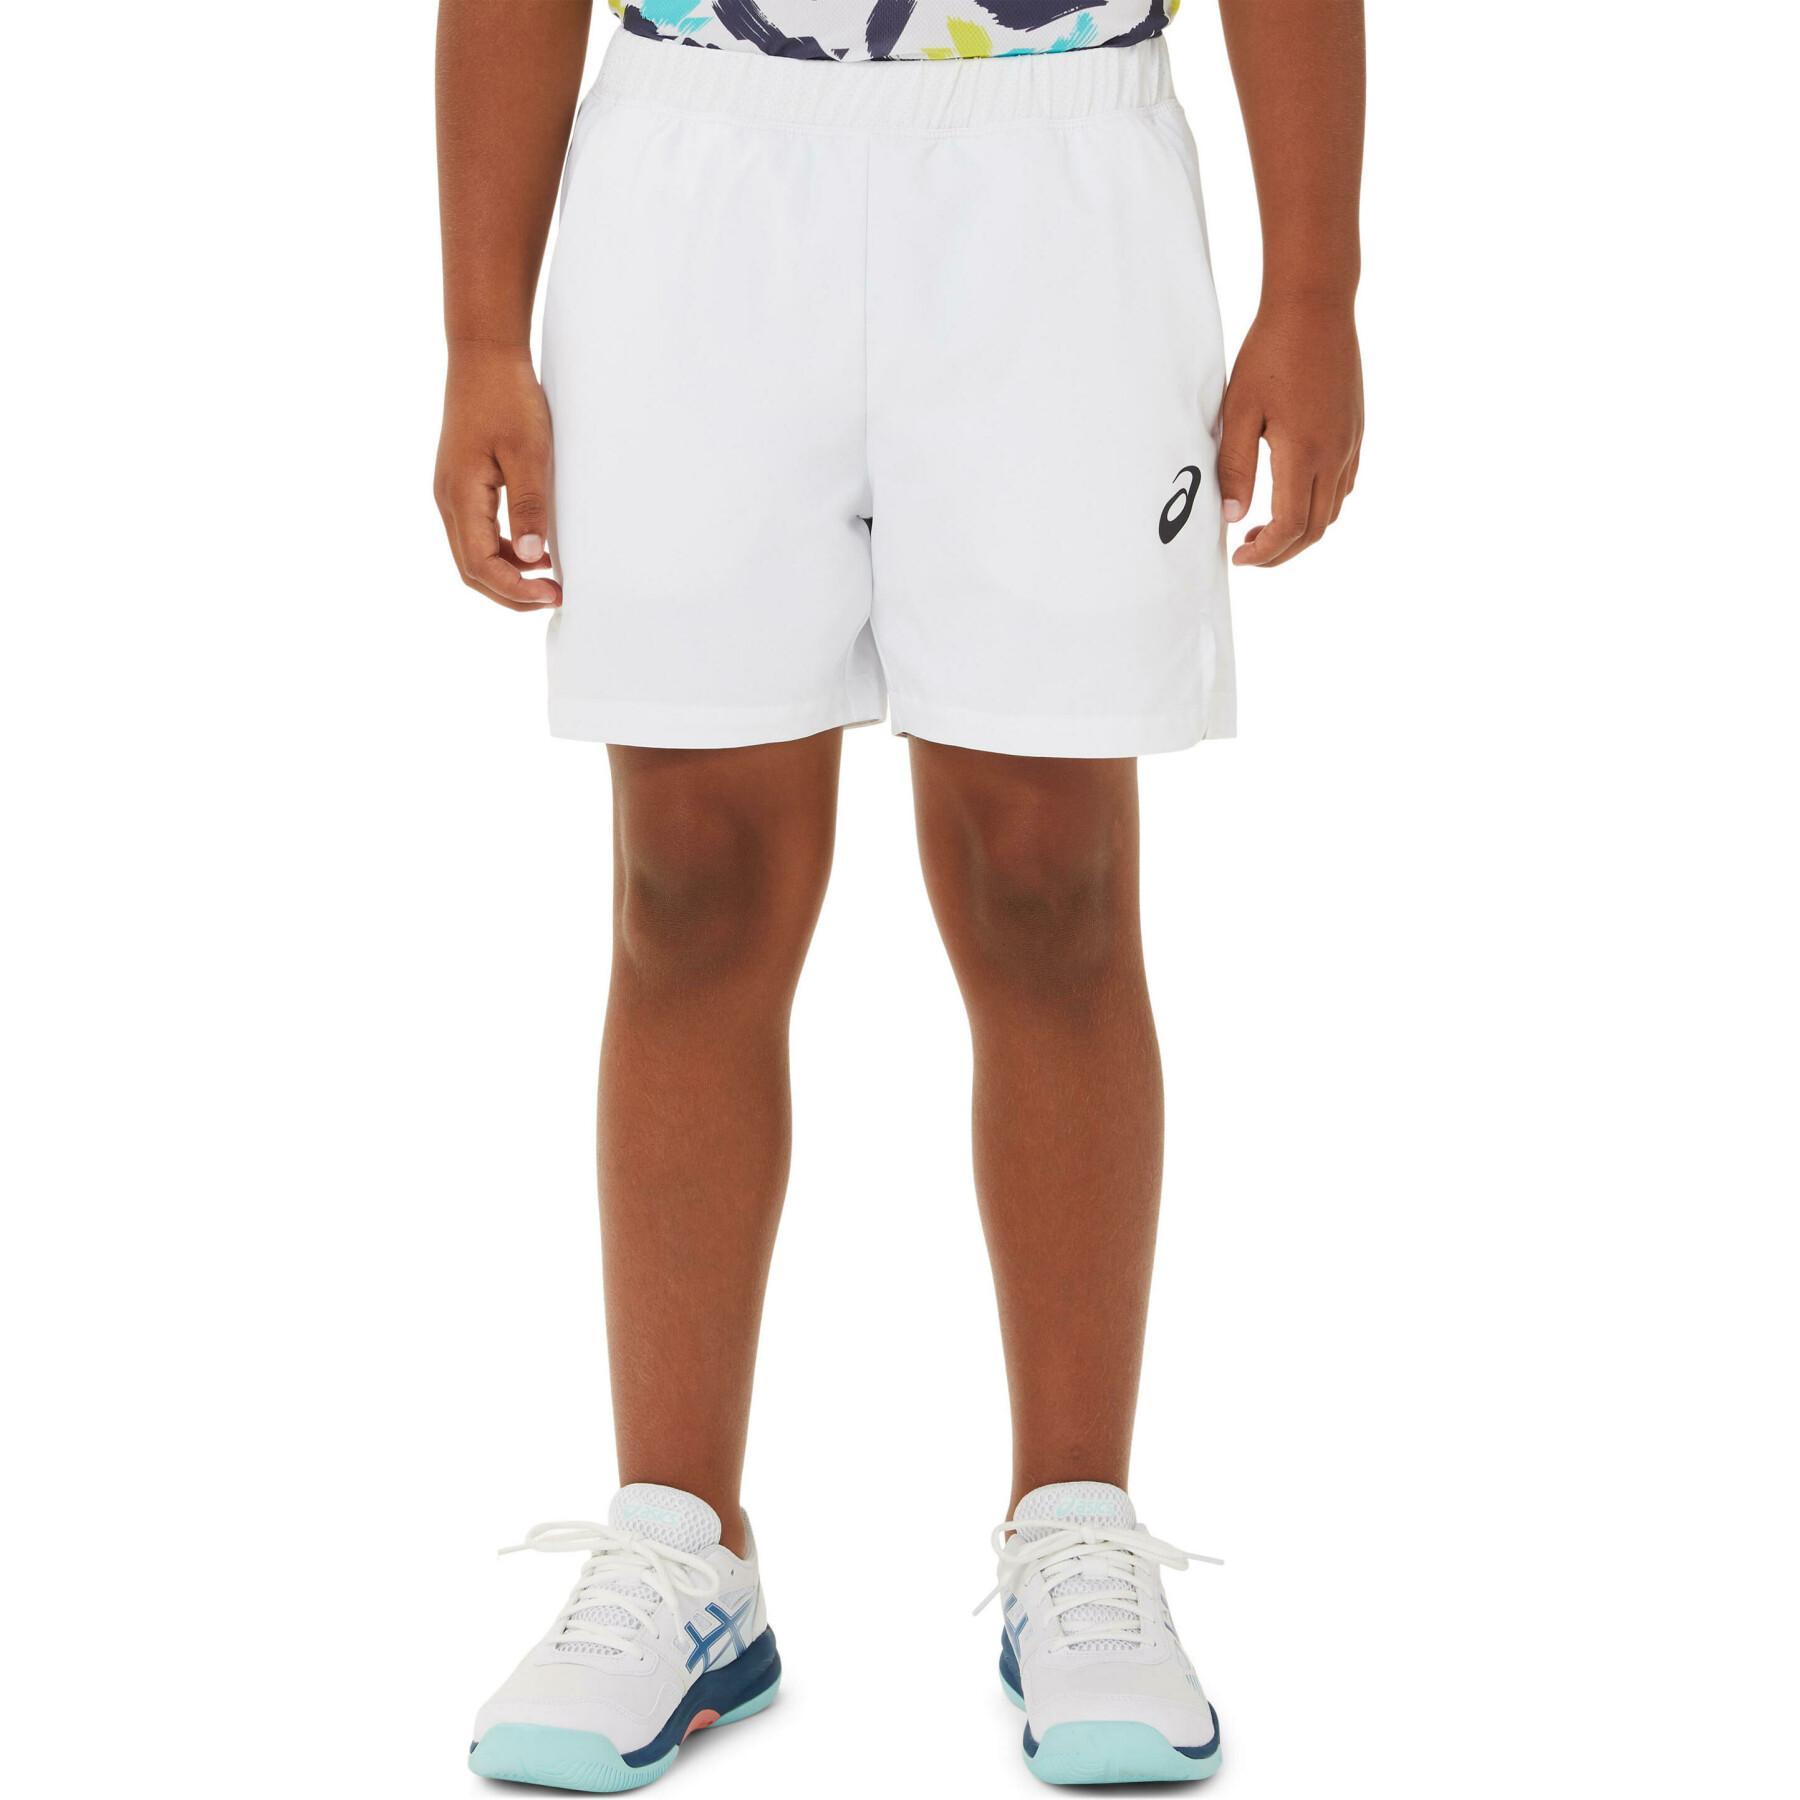 Pantalón corto para niños Asics Boys Tennis